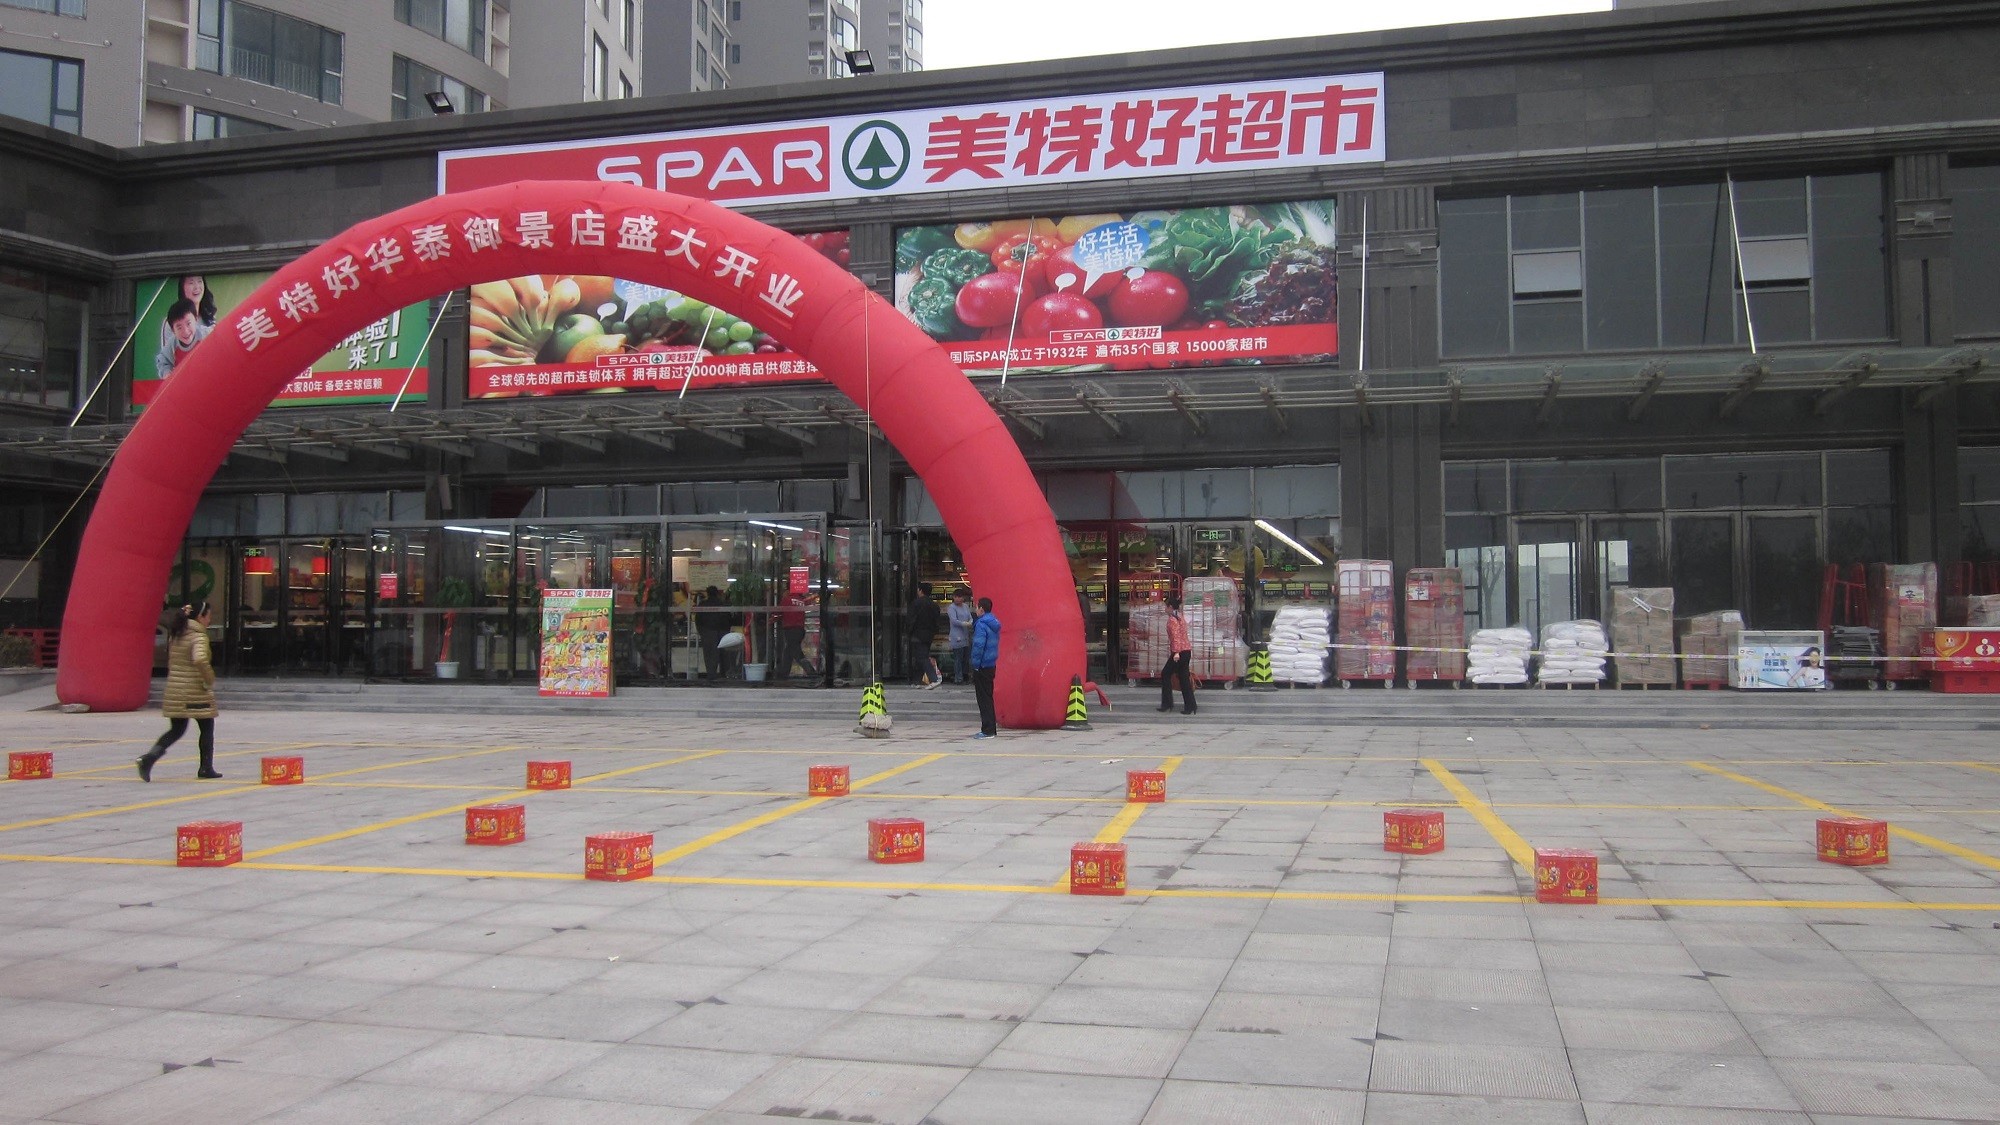 SPARMeetall Huatai Yujing New Store